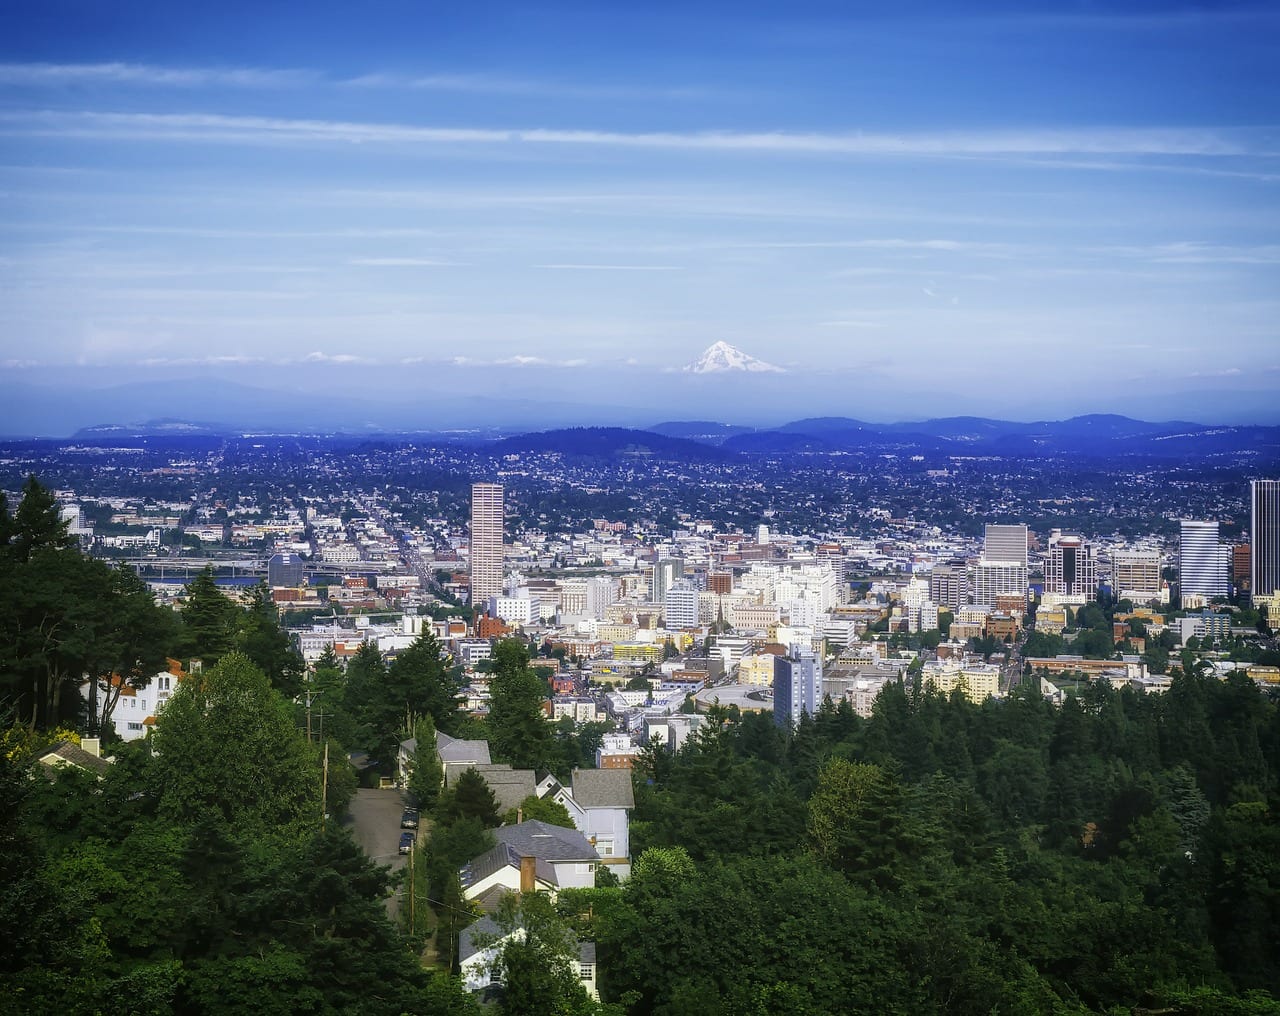 Image of the city of Portland, Oregon